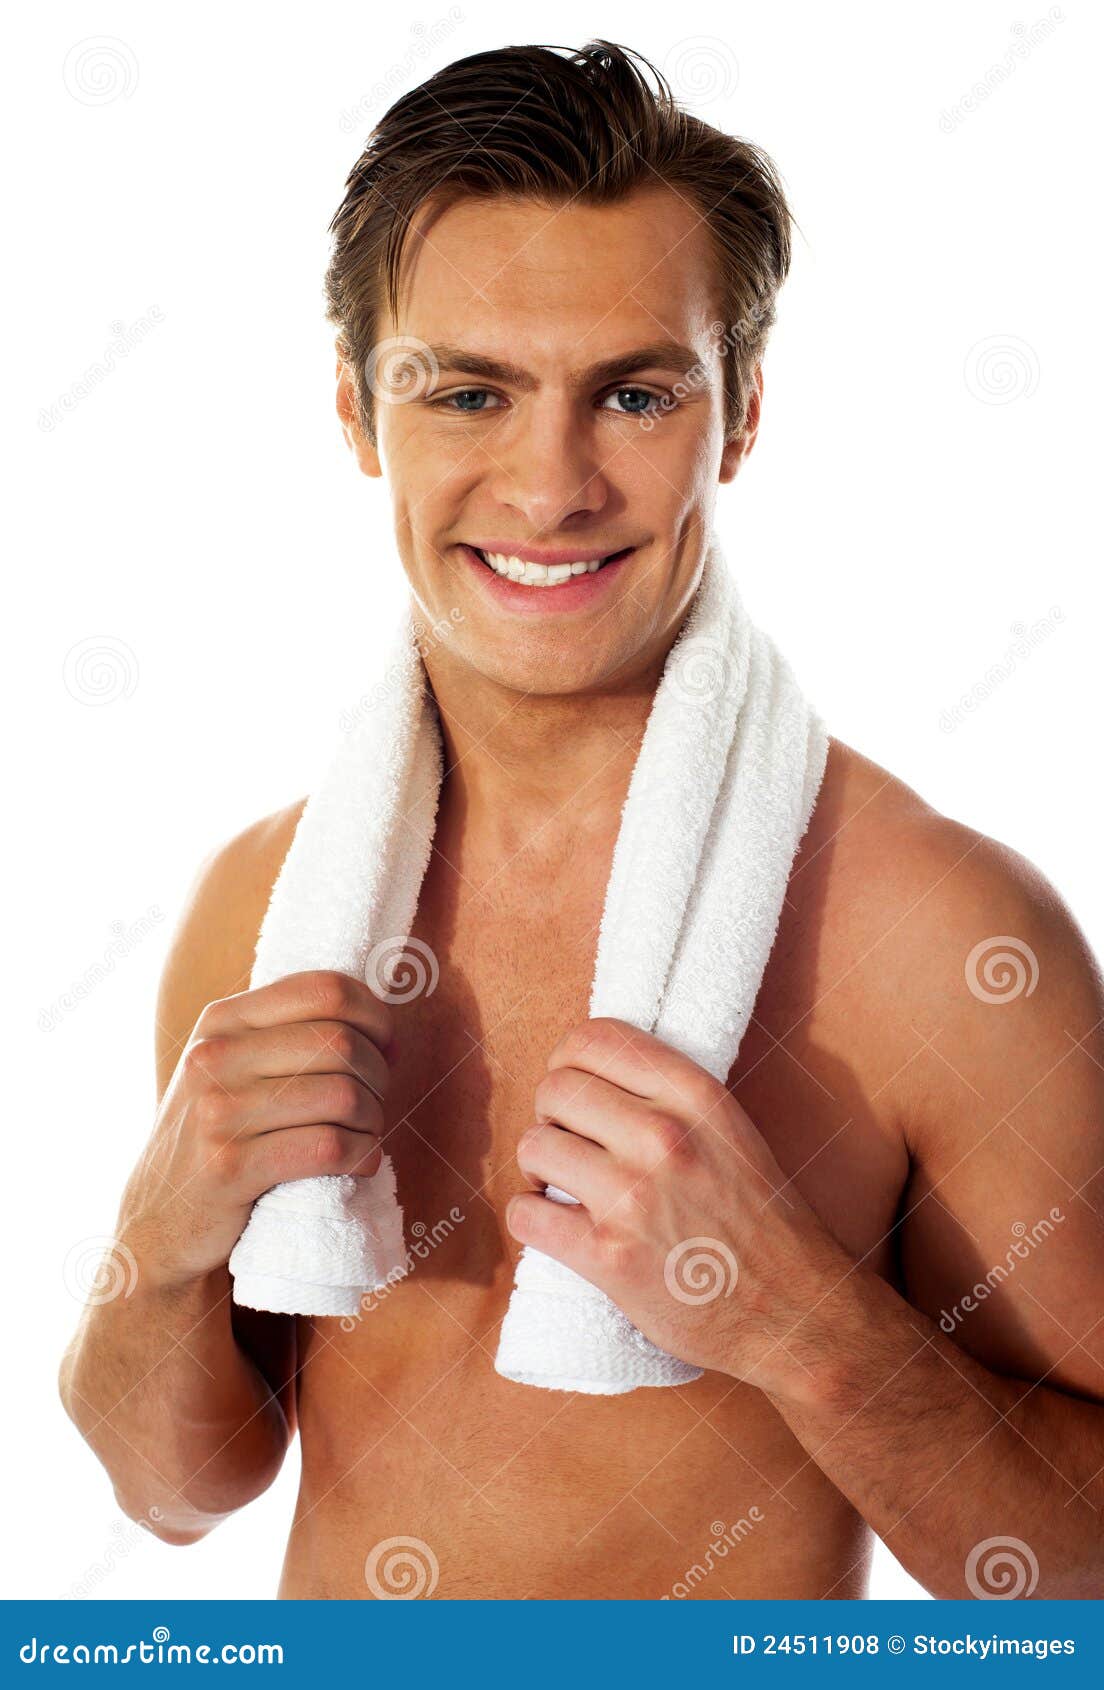 Полотенце на шею. Мужчина с полотенцем на шее. Парень с полотенцем на плече. Полотенце на шее. Человек в полотенце.